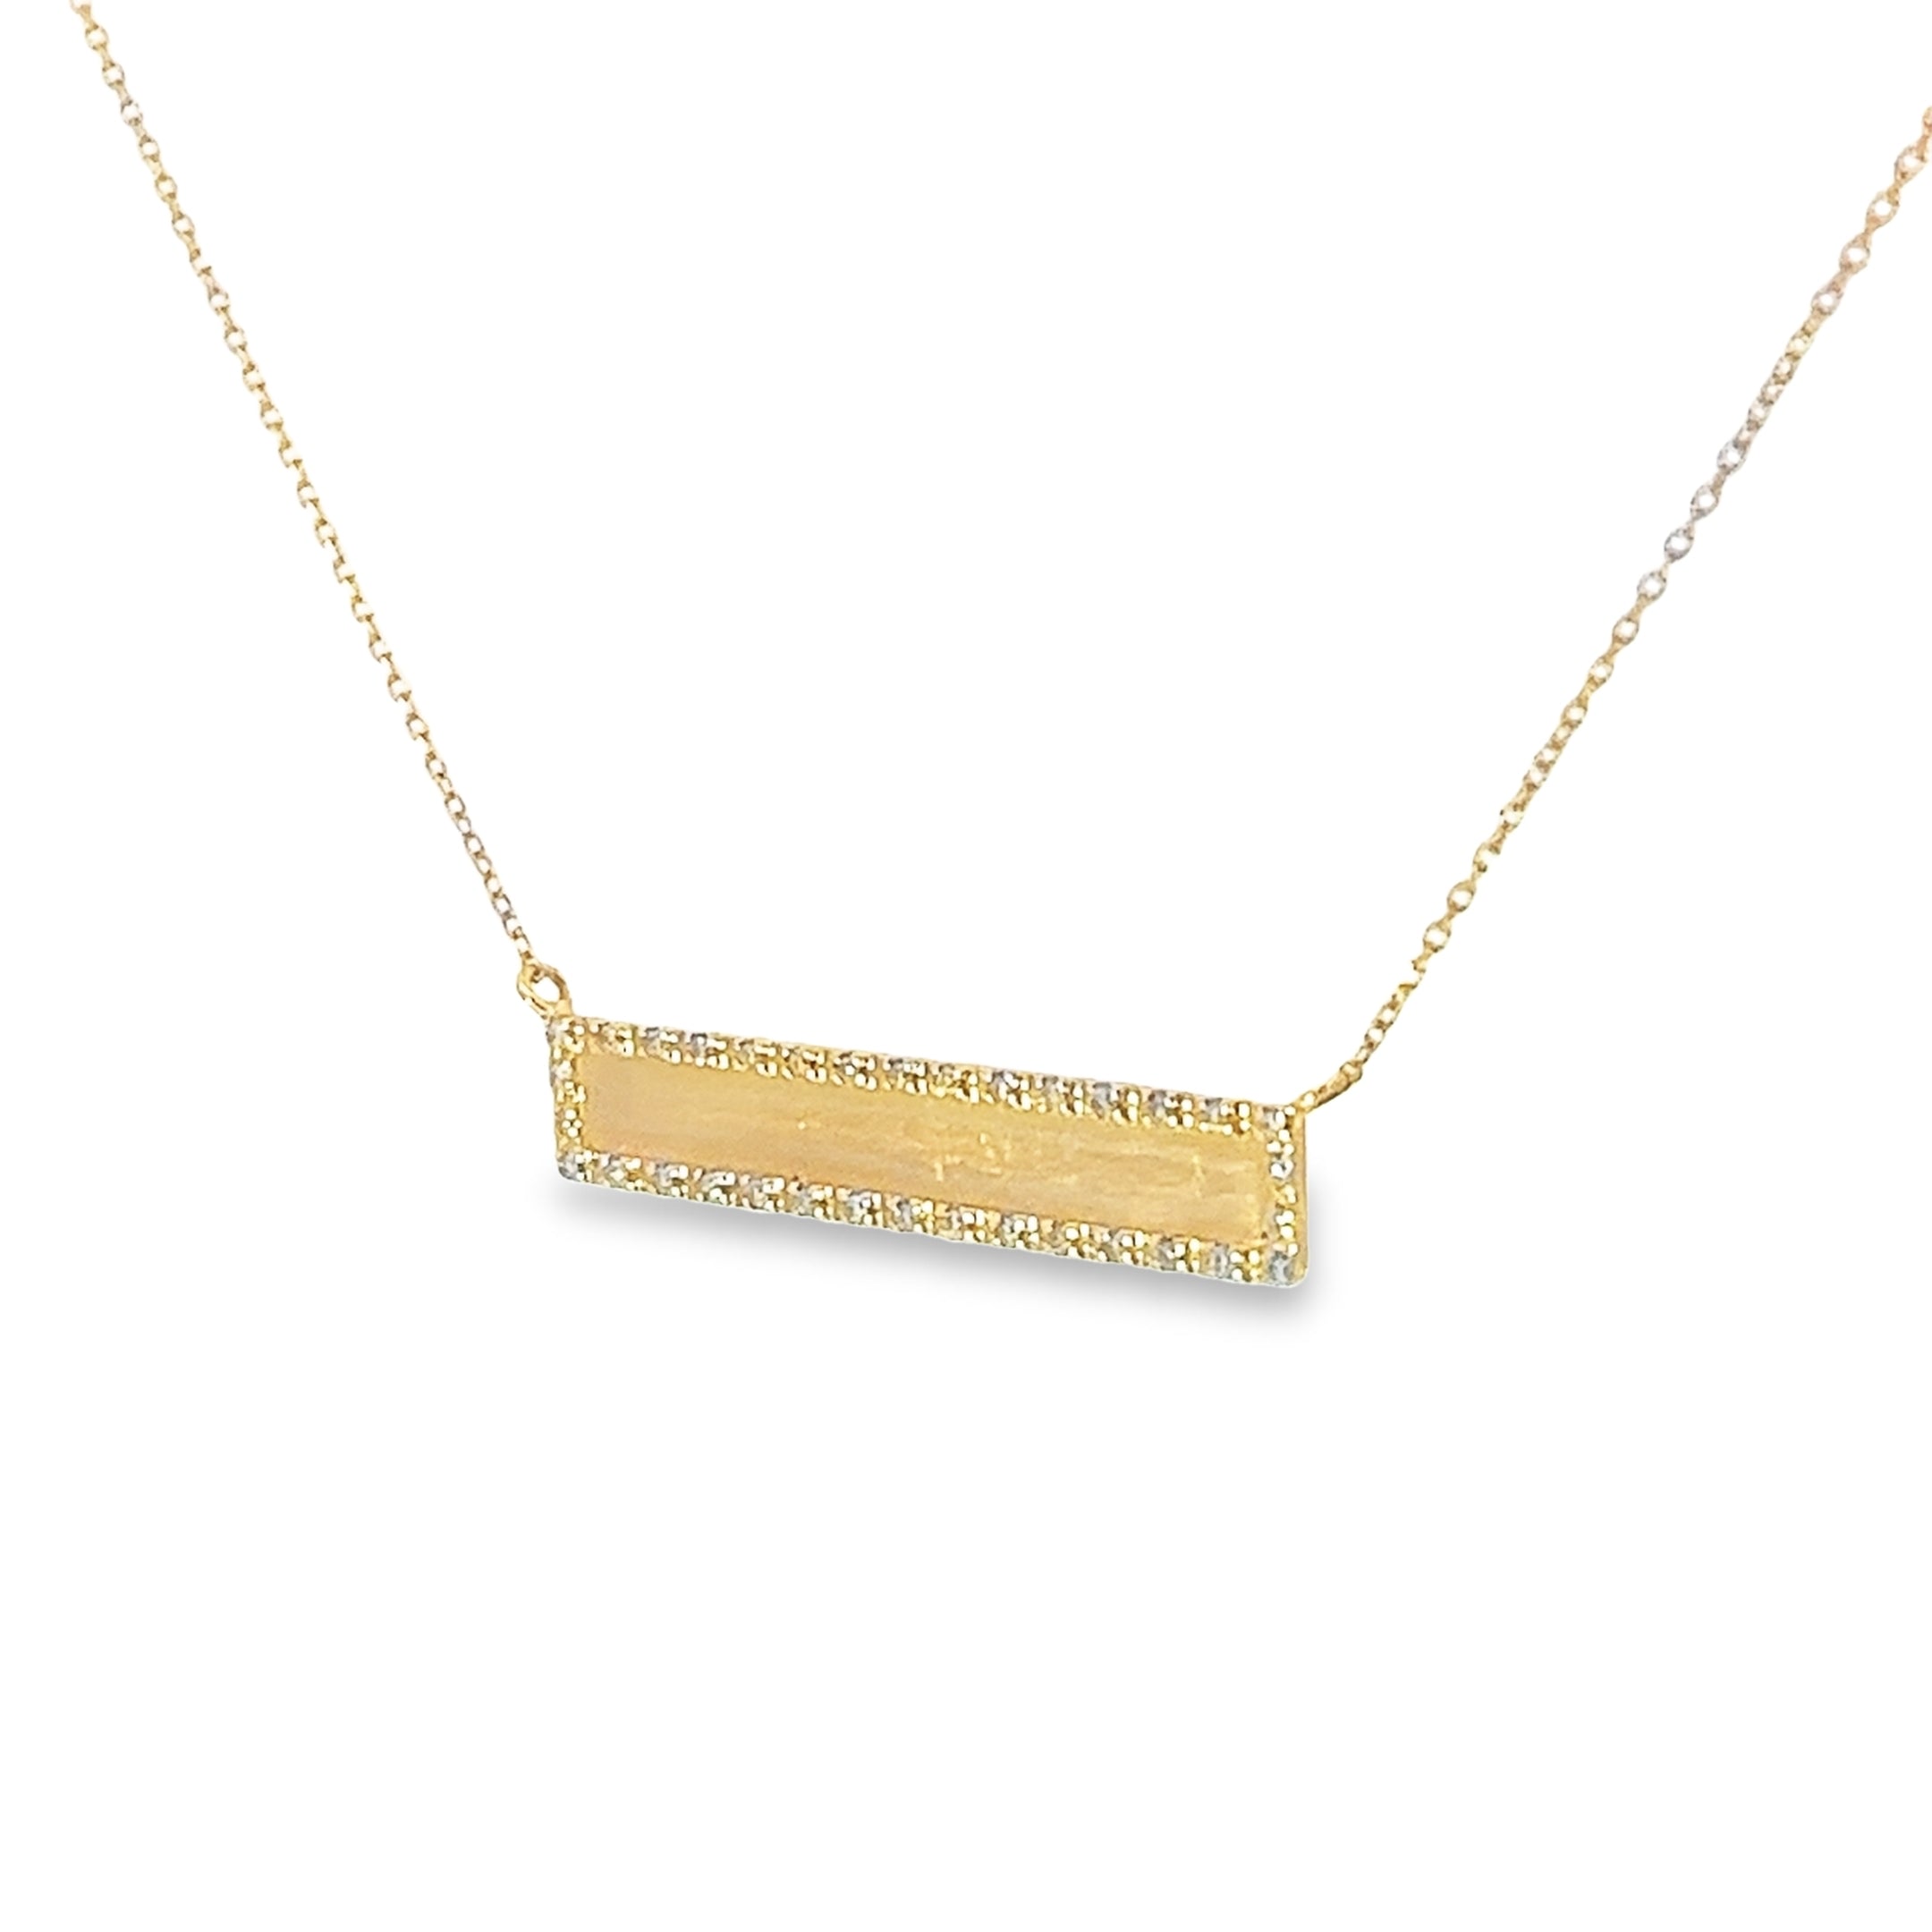 Ladies 14k yellow gold diamond Bar necklace